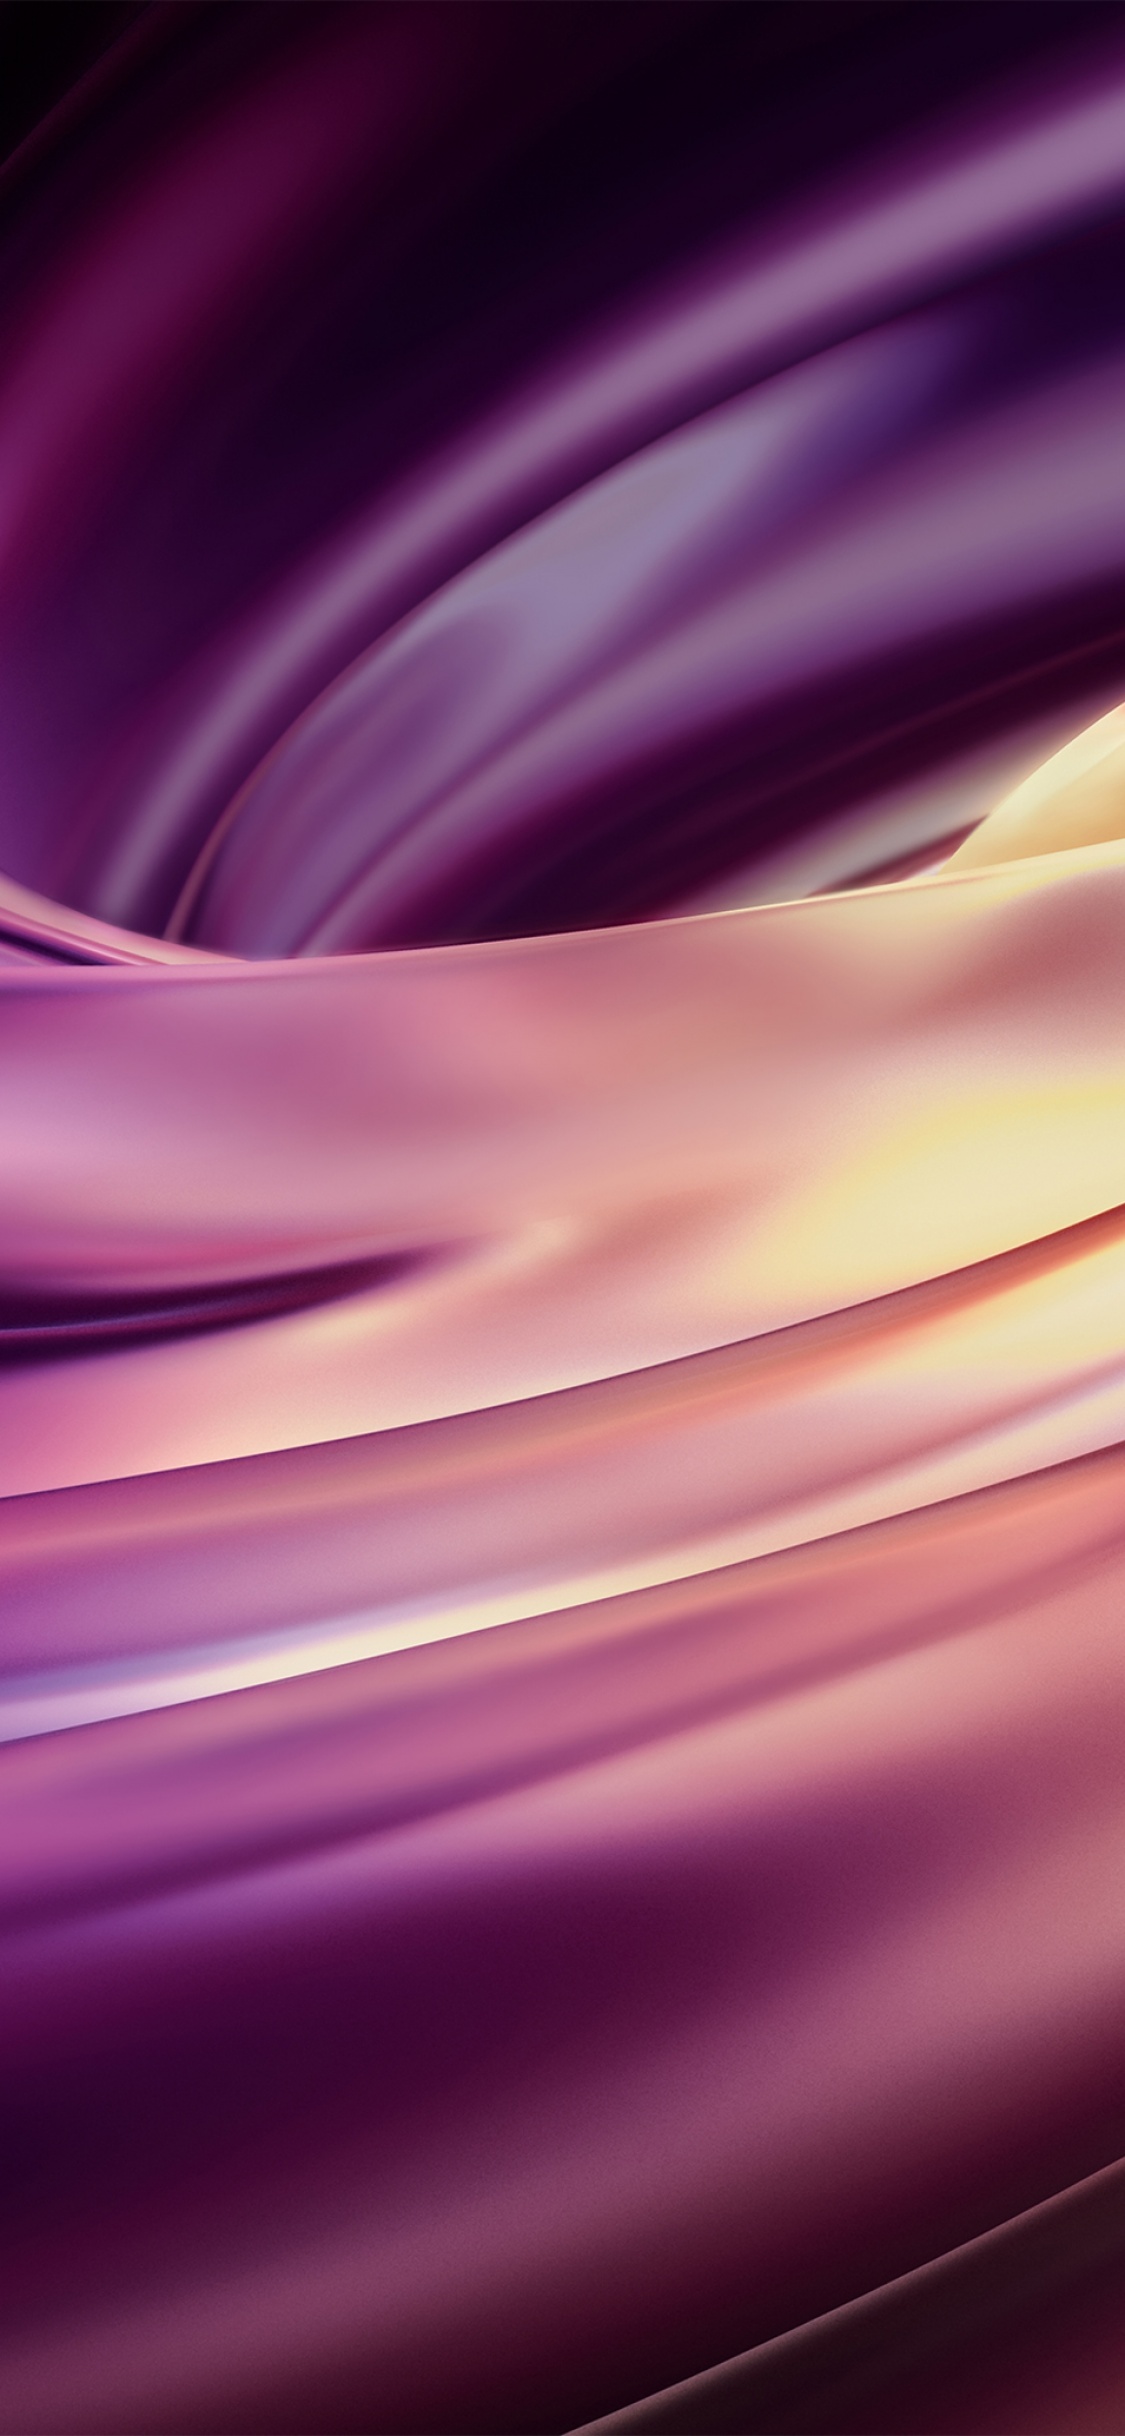 Swirls 4K Wallpaper, Pink, Huawei MateBook Pro, Stock, Abstract, #1655